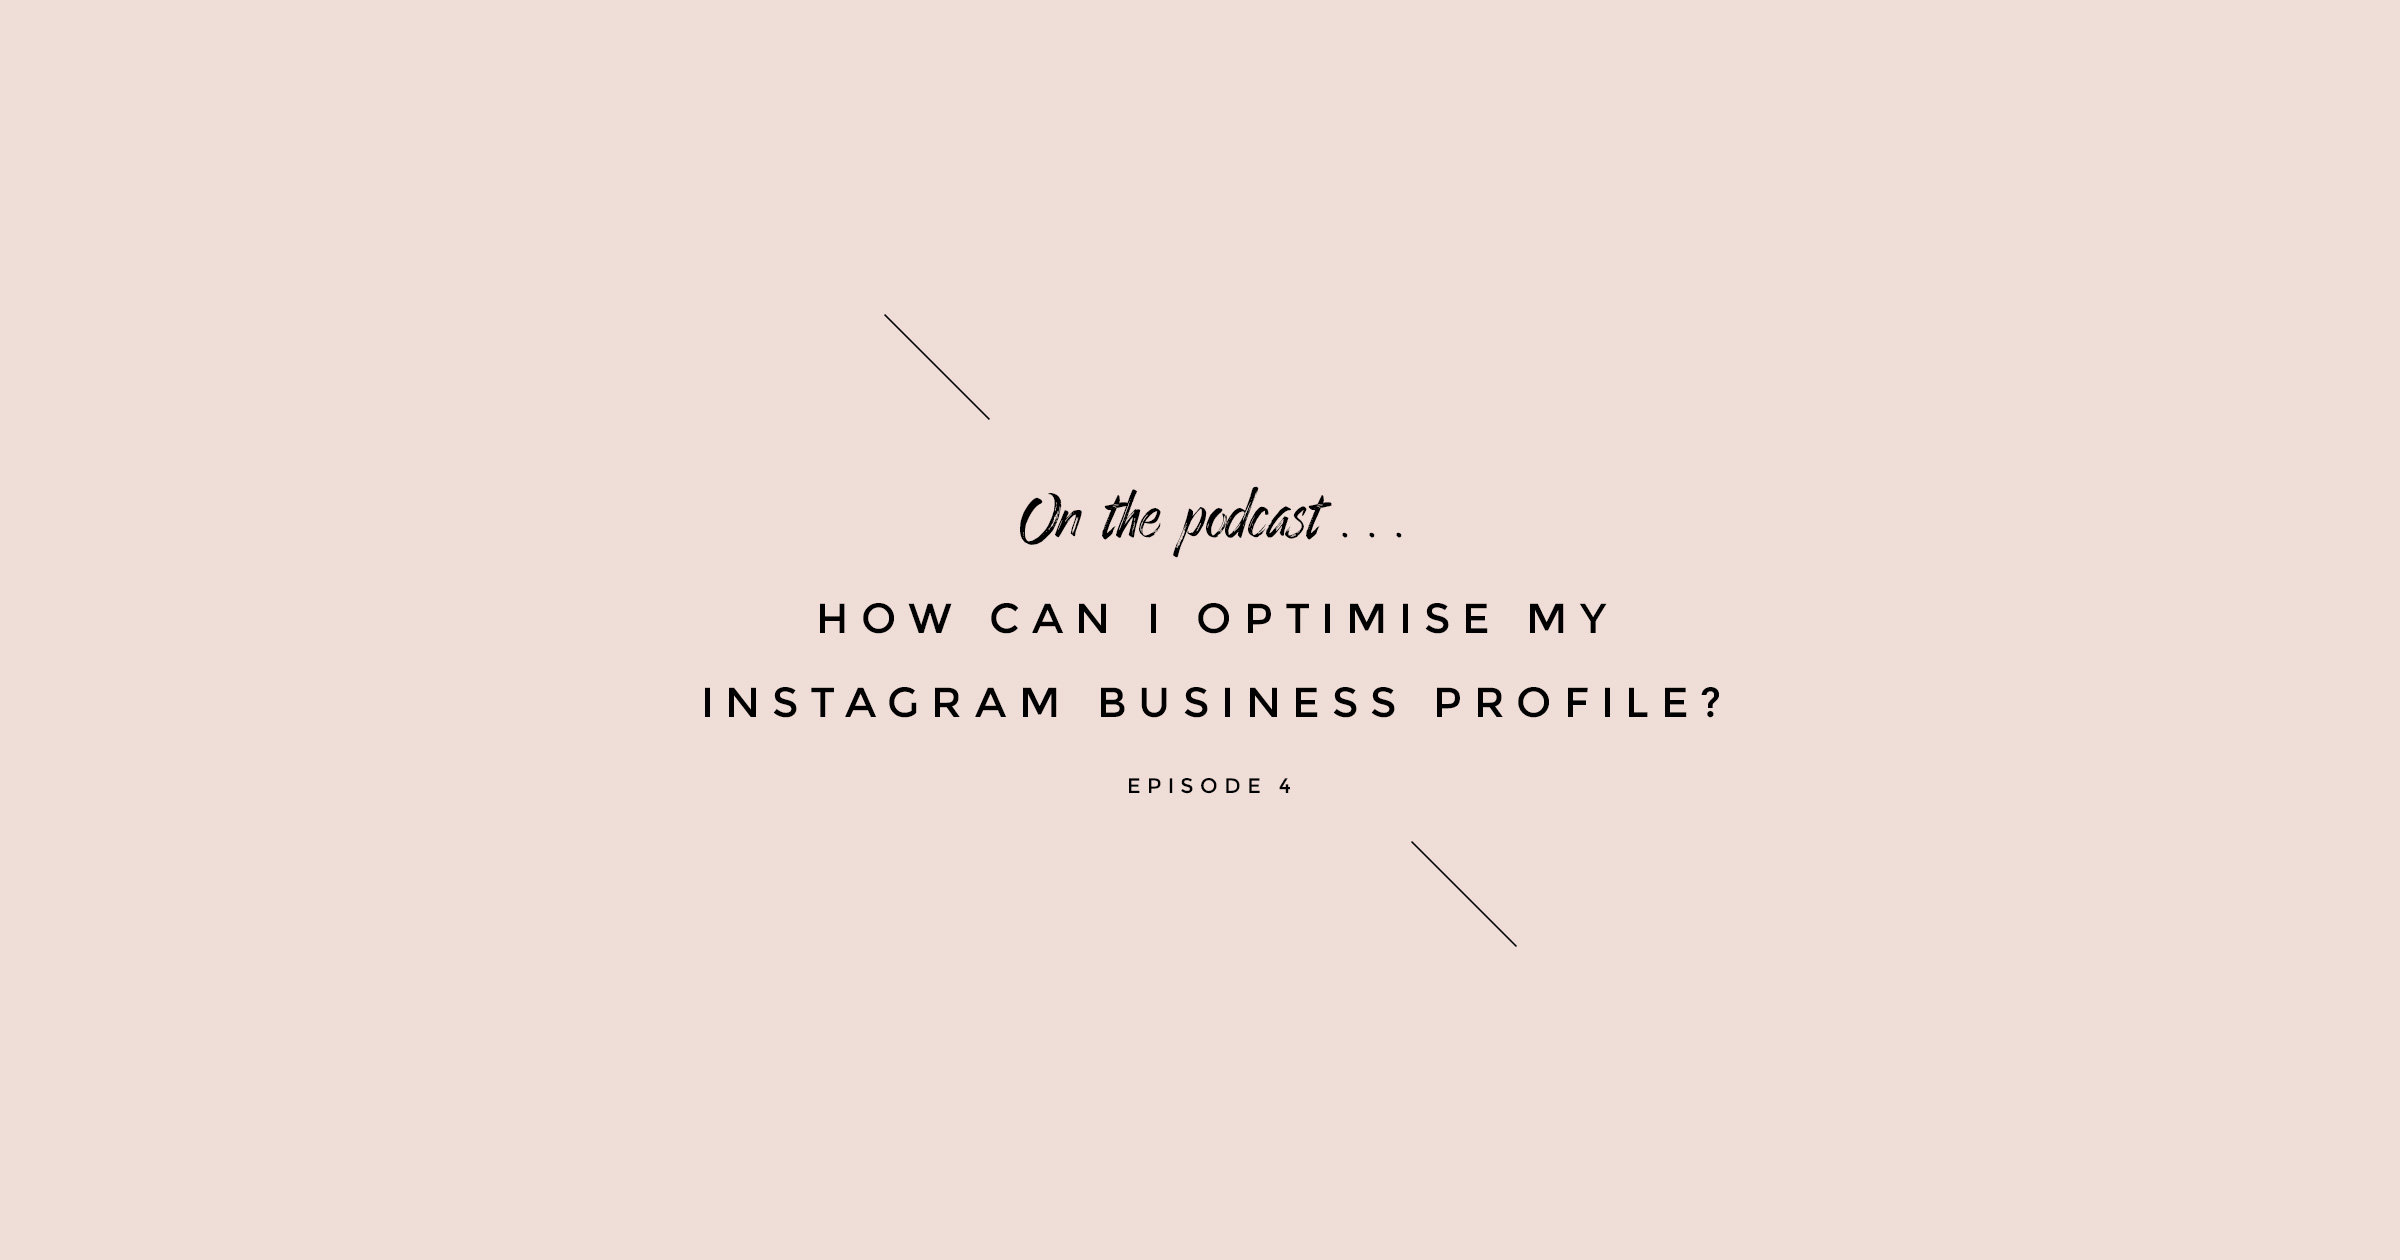 Optimise your instagram business profile